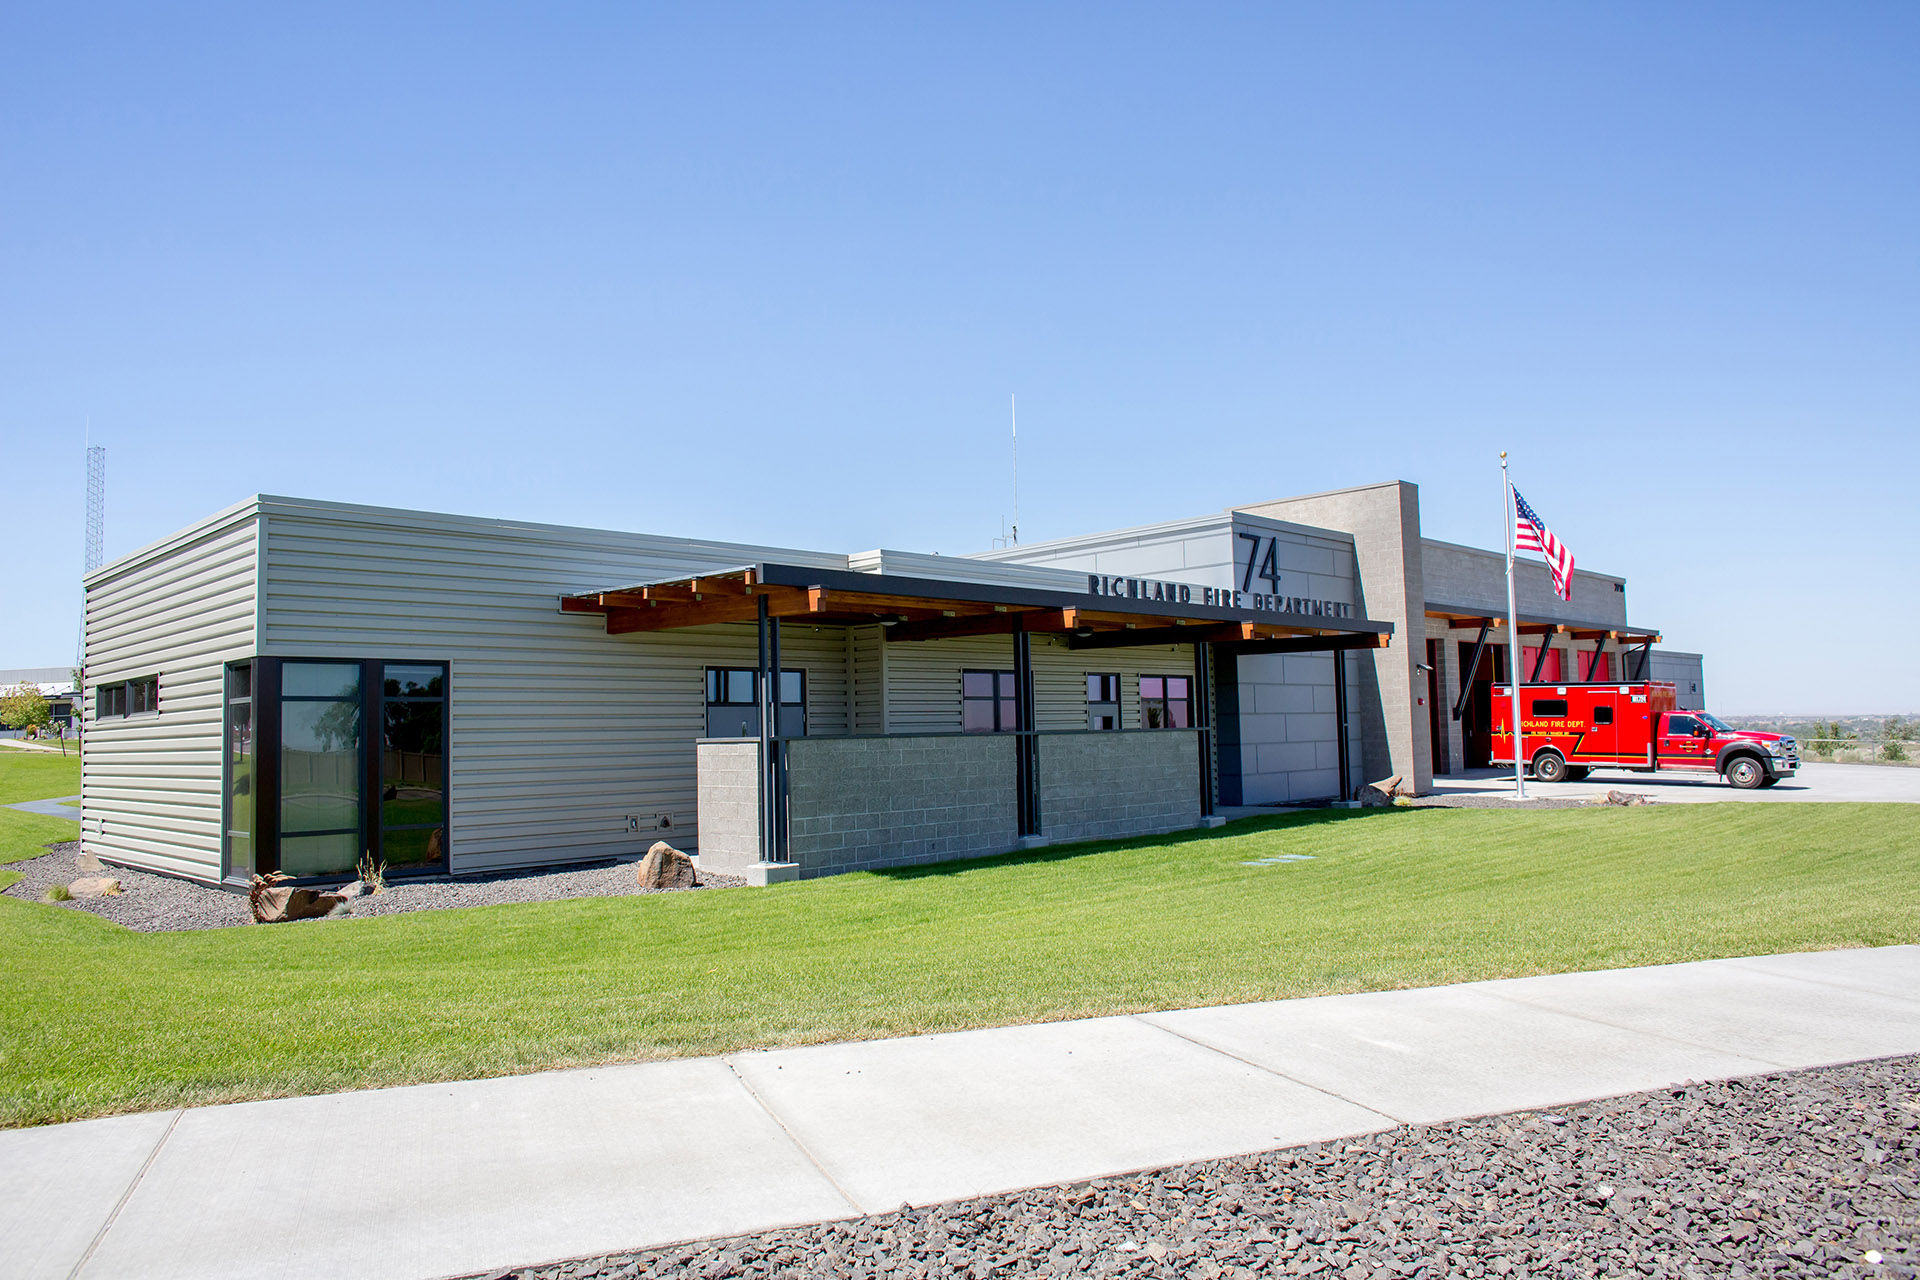 Richland Fire Department No 74 Exterior